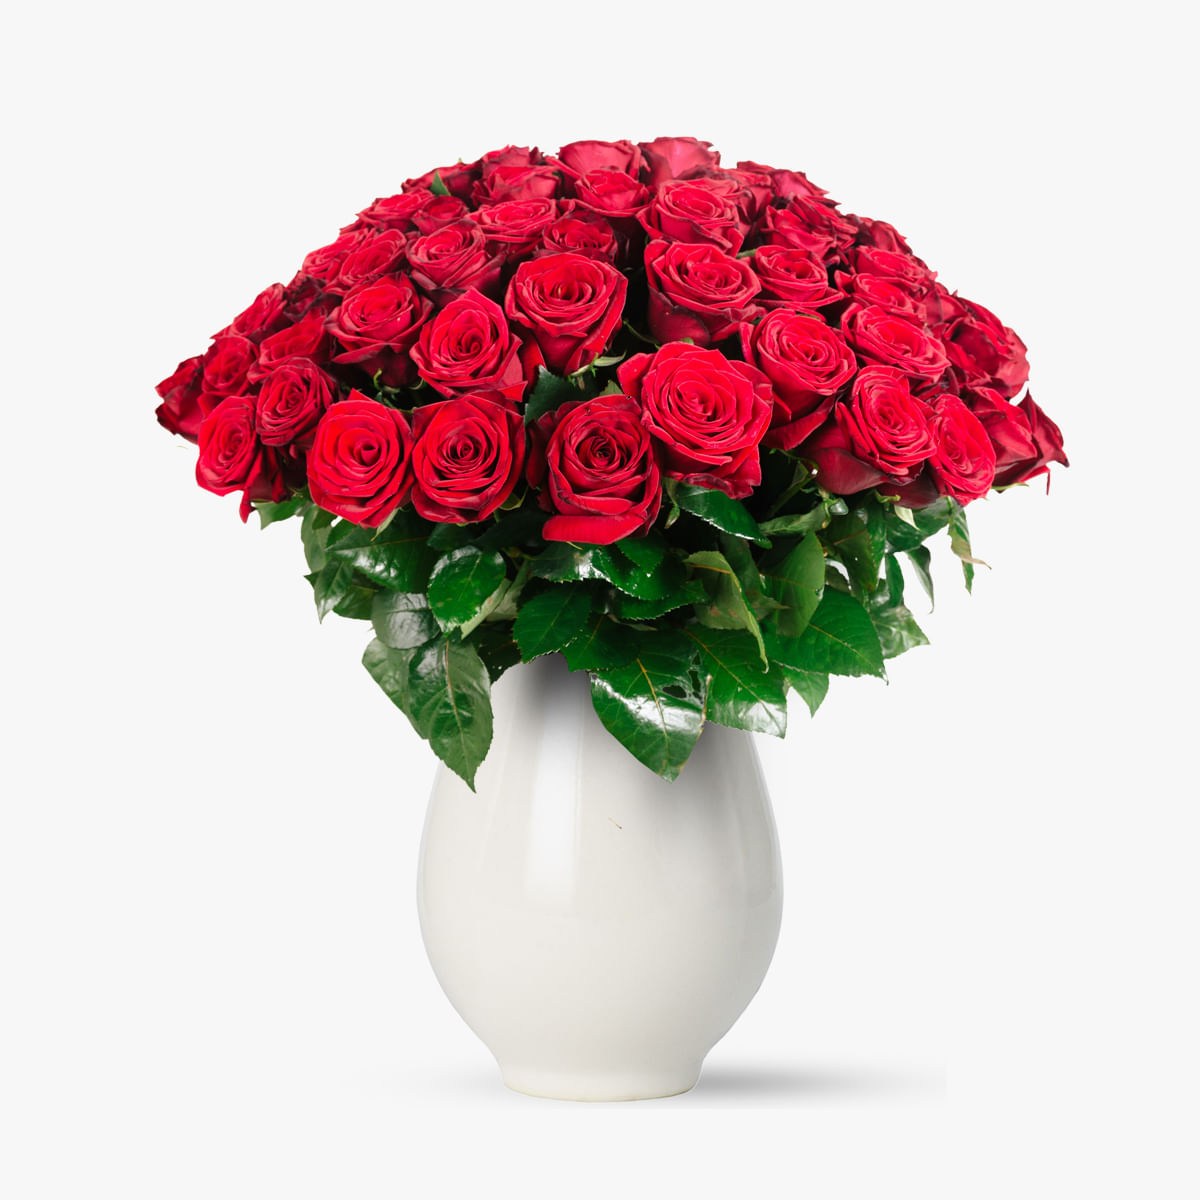 Buchet de 45 trandafiri rosii – Standard Buchet